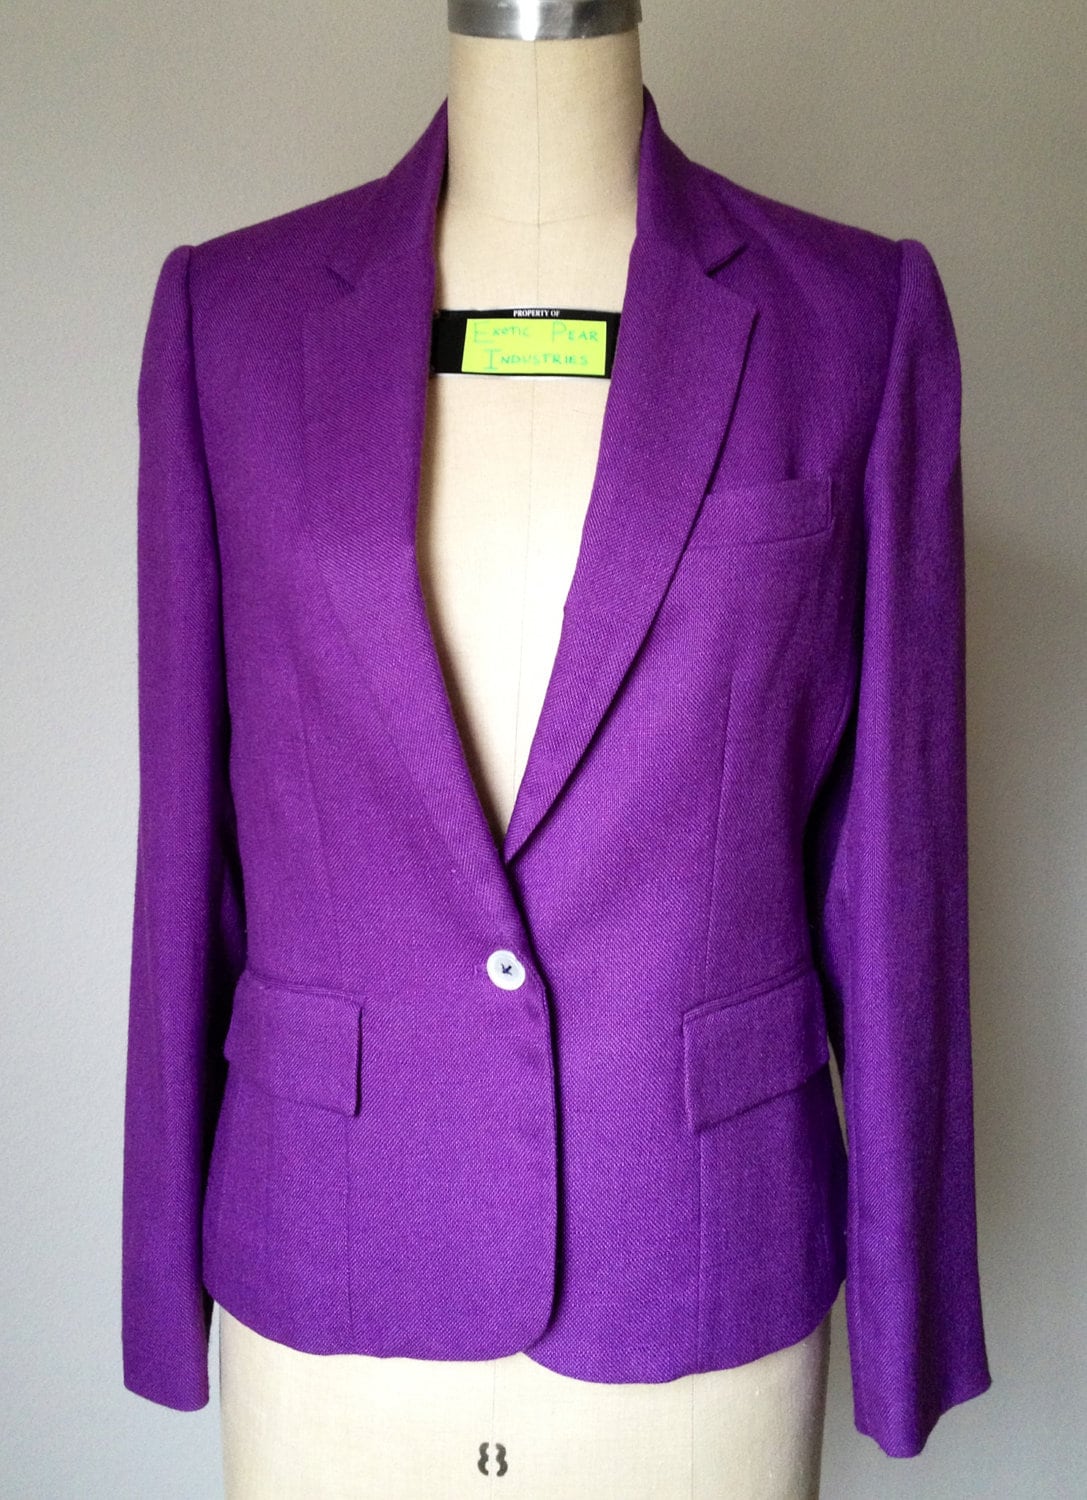 Working Girl Women's Vintage Purple Blazer Suit by EPIVintage